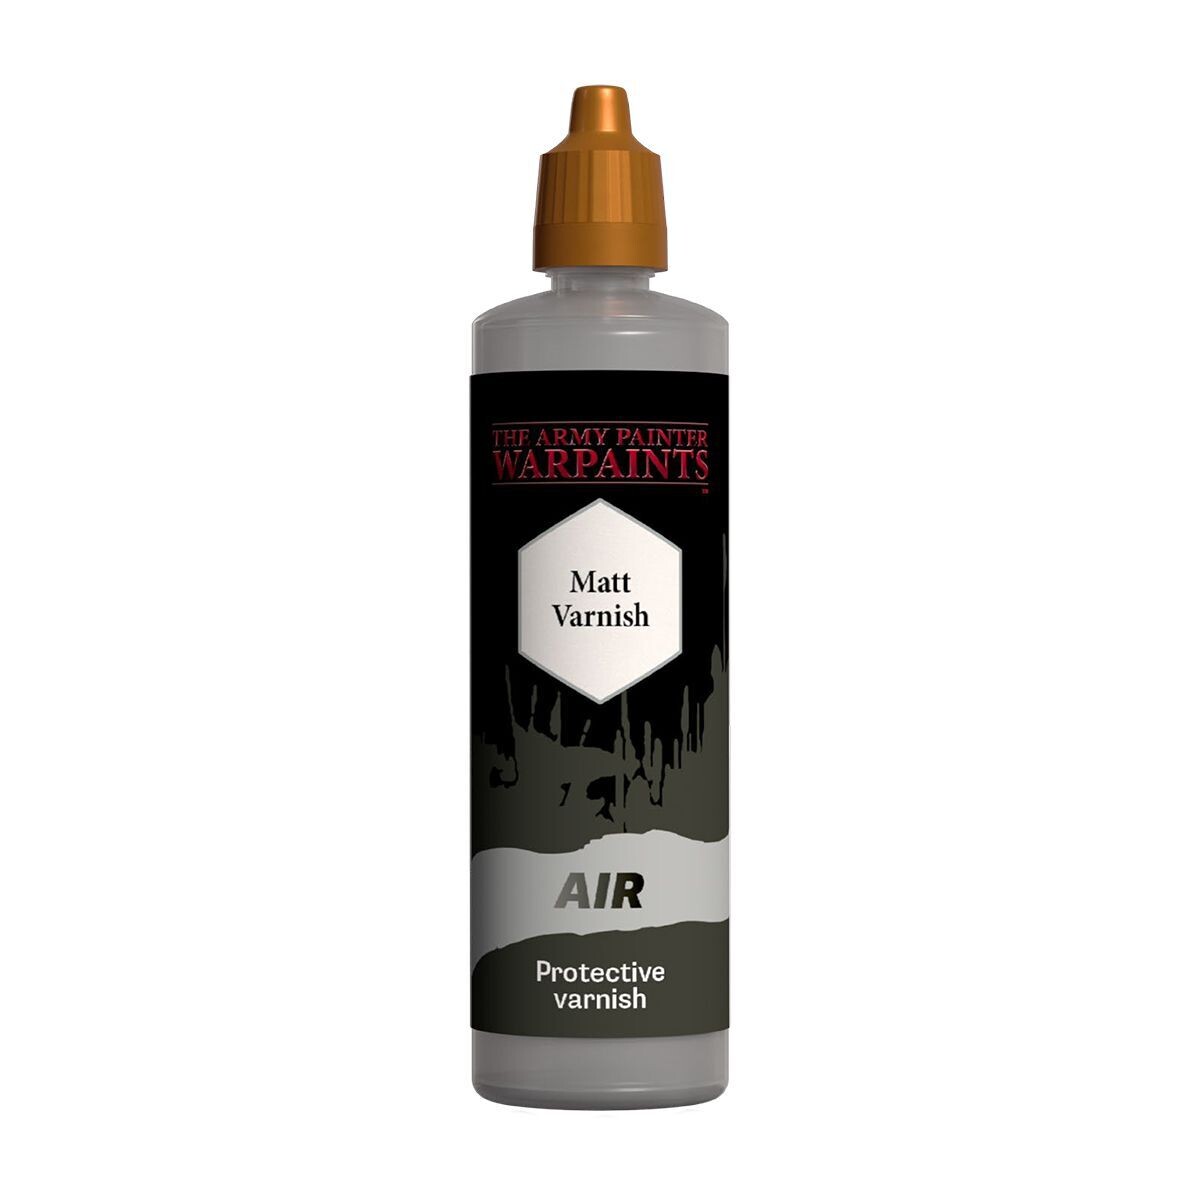 Air Anti-shine Matt Varnish, 100 ml -  Army Painter Warpaints